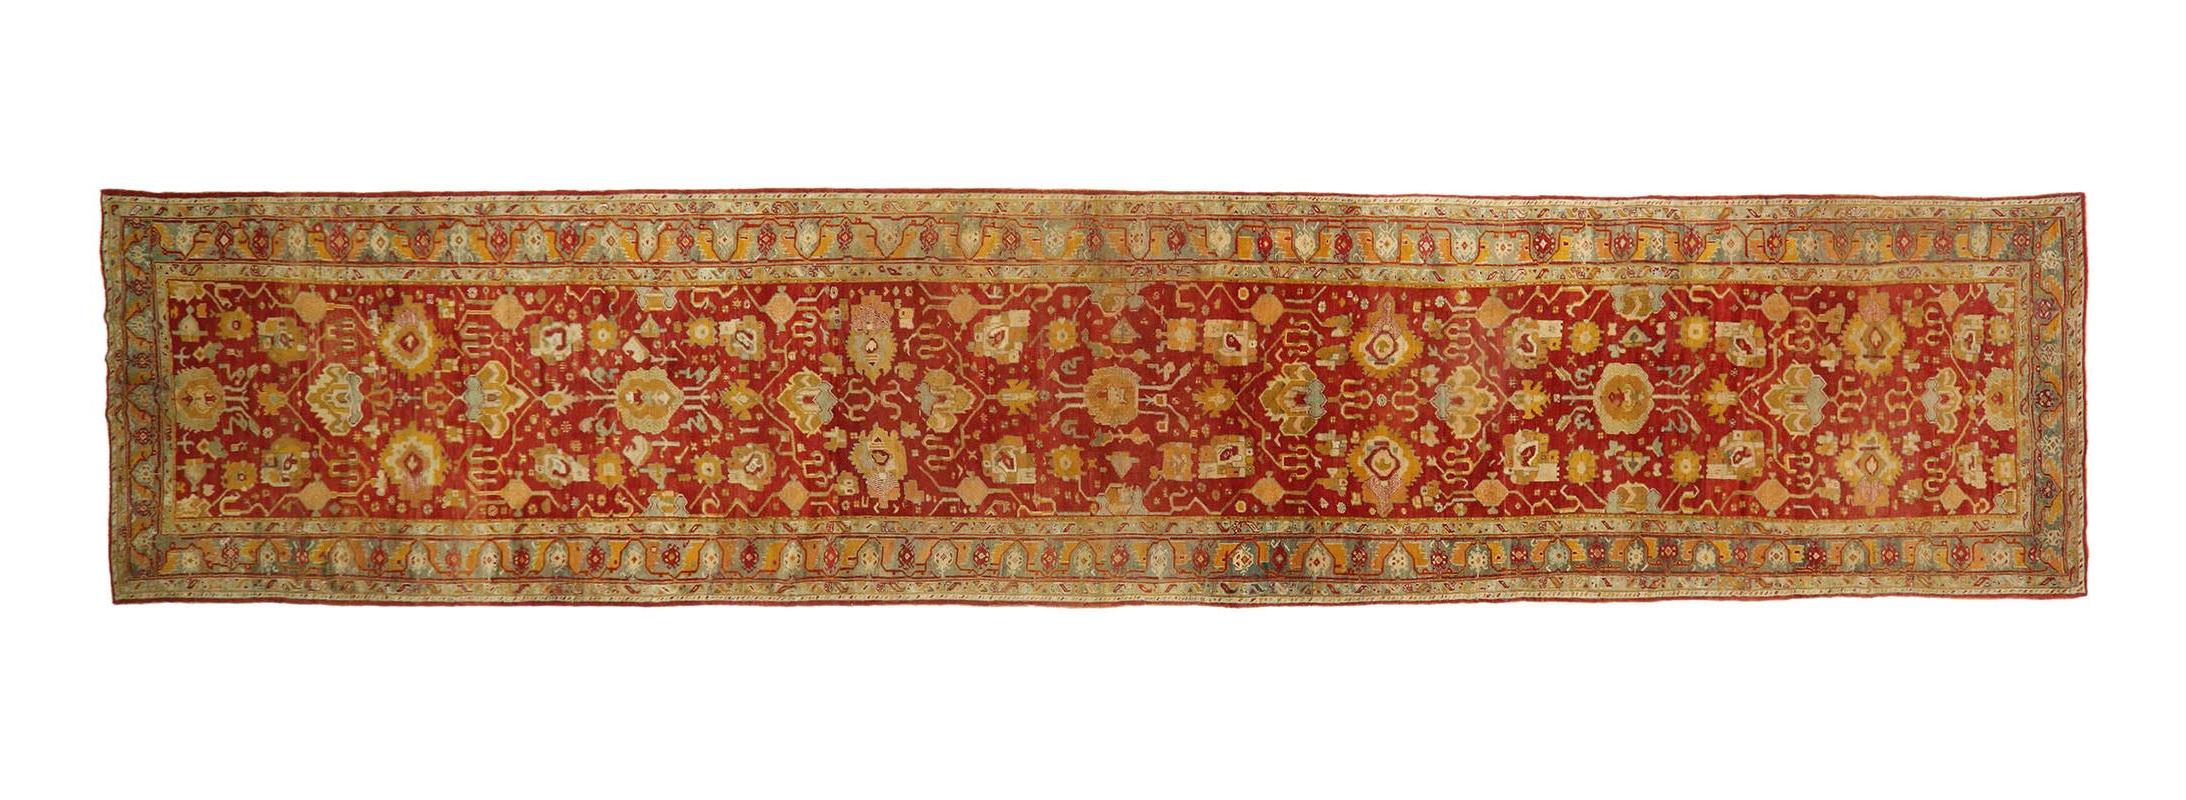 1880s Antique Turkish Oushak Rug Extra Long Hotel Lobby Size Carpet For Sale 2